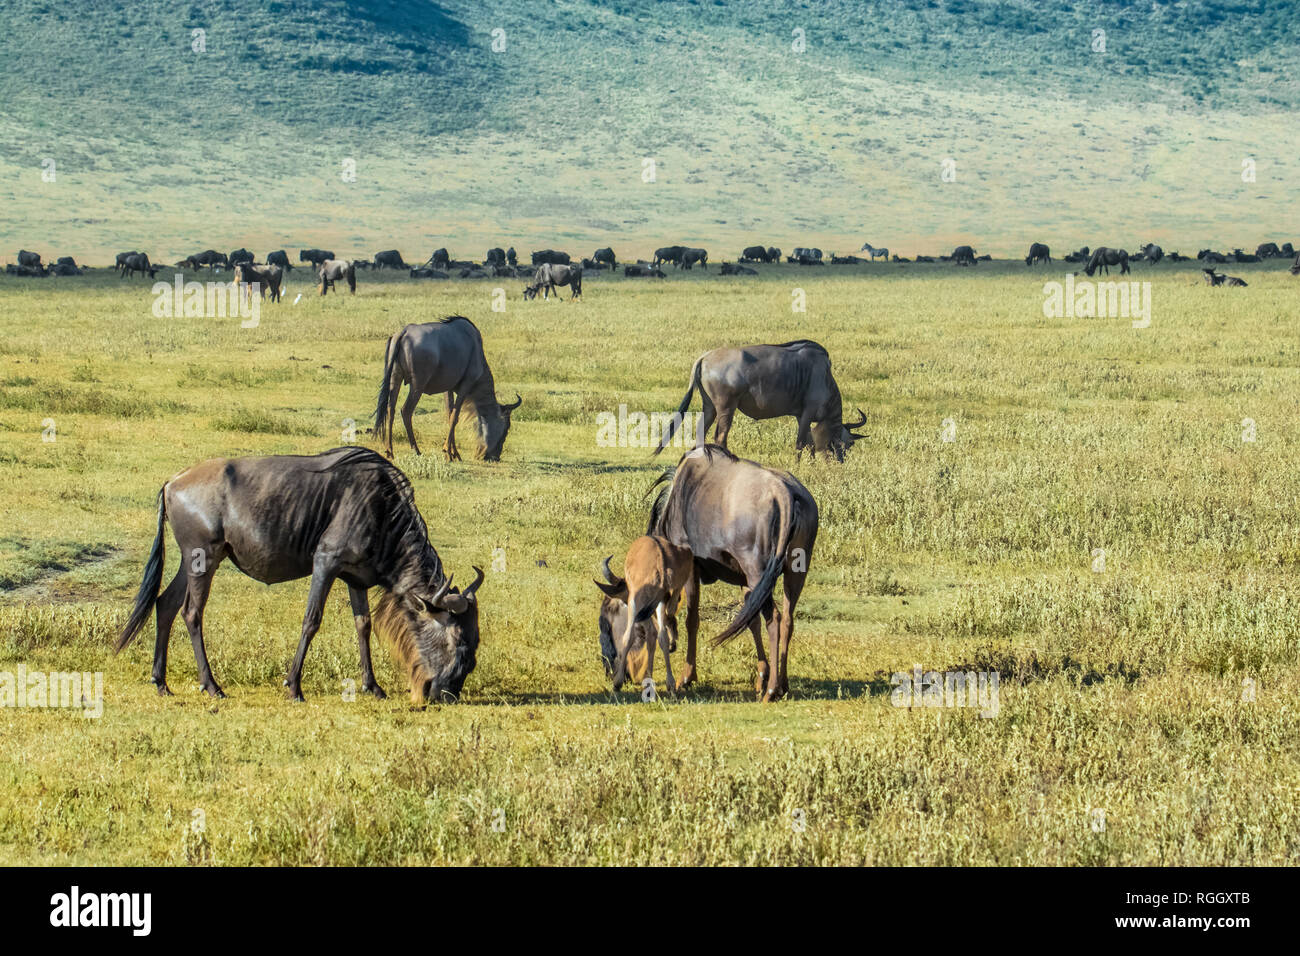 Wildebeests in the Savannah Stock Photo